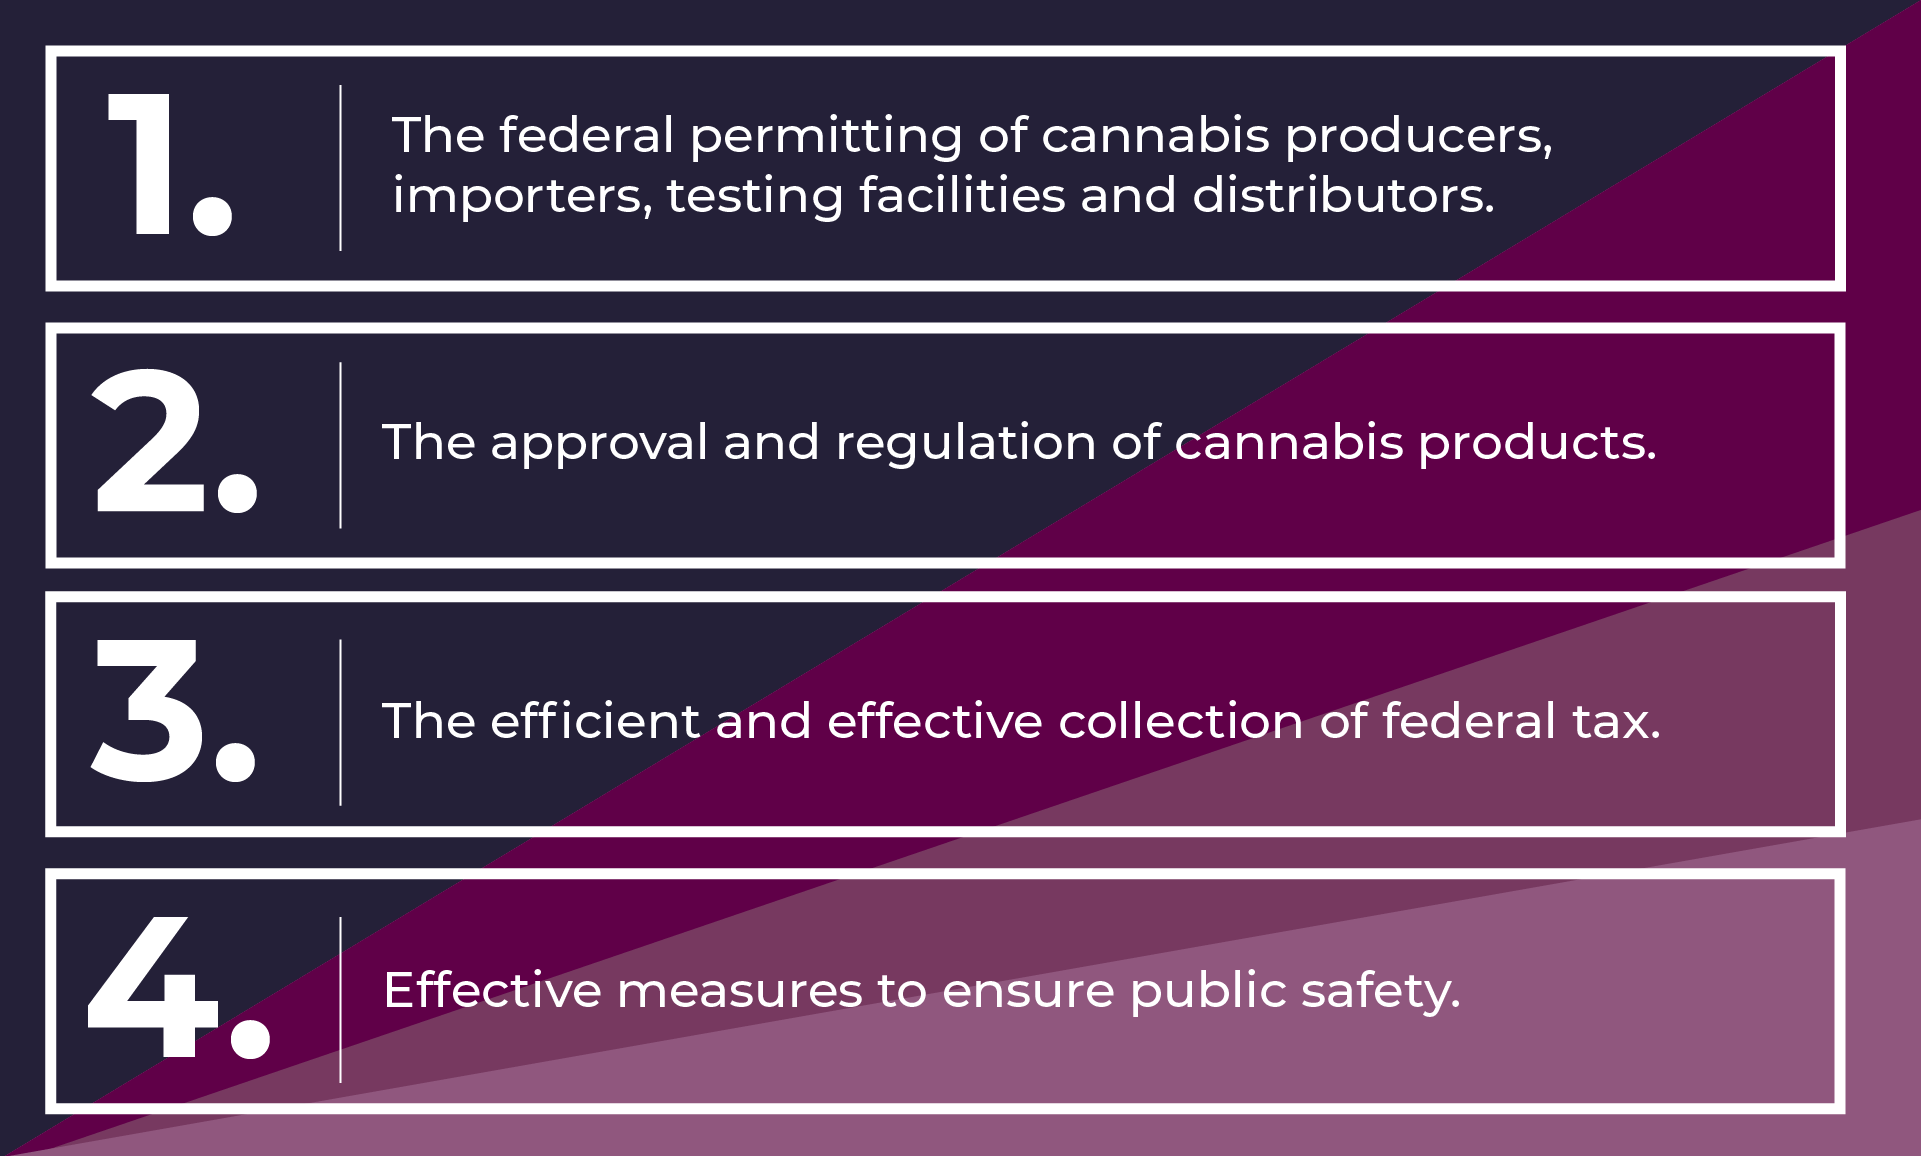 Four Pillars of Safe, Responsible Cannabis Legalization & Regulation